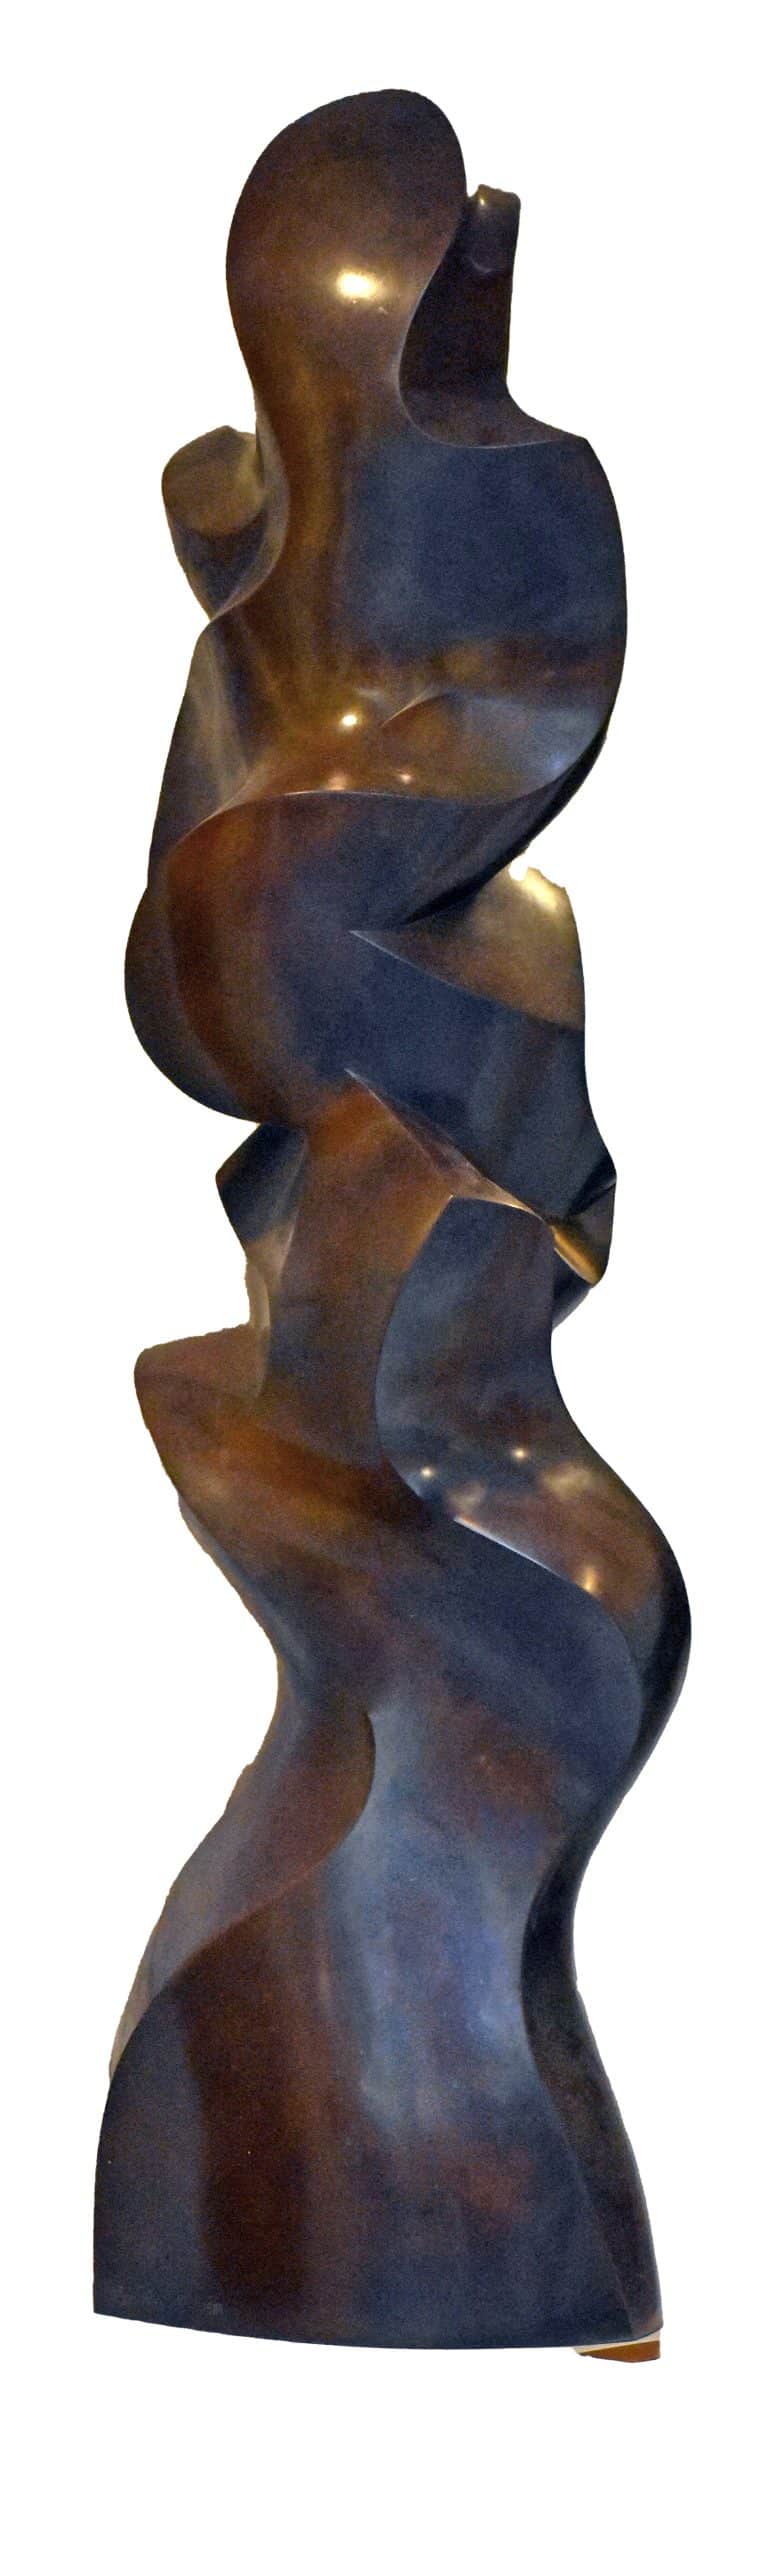 Lee Aks (American, 1946- ) Born in Bethesda, Maryland Sculptor Rhythms of Life Sculpture, Bronze